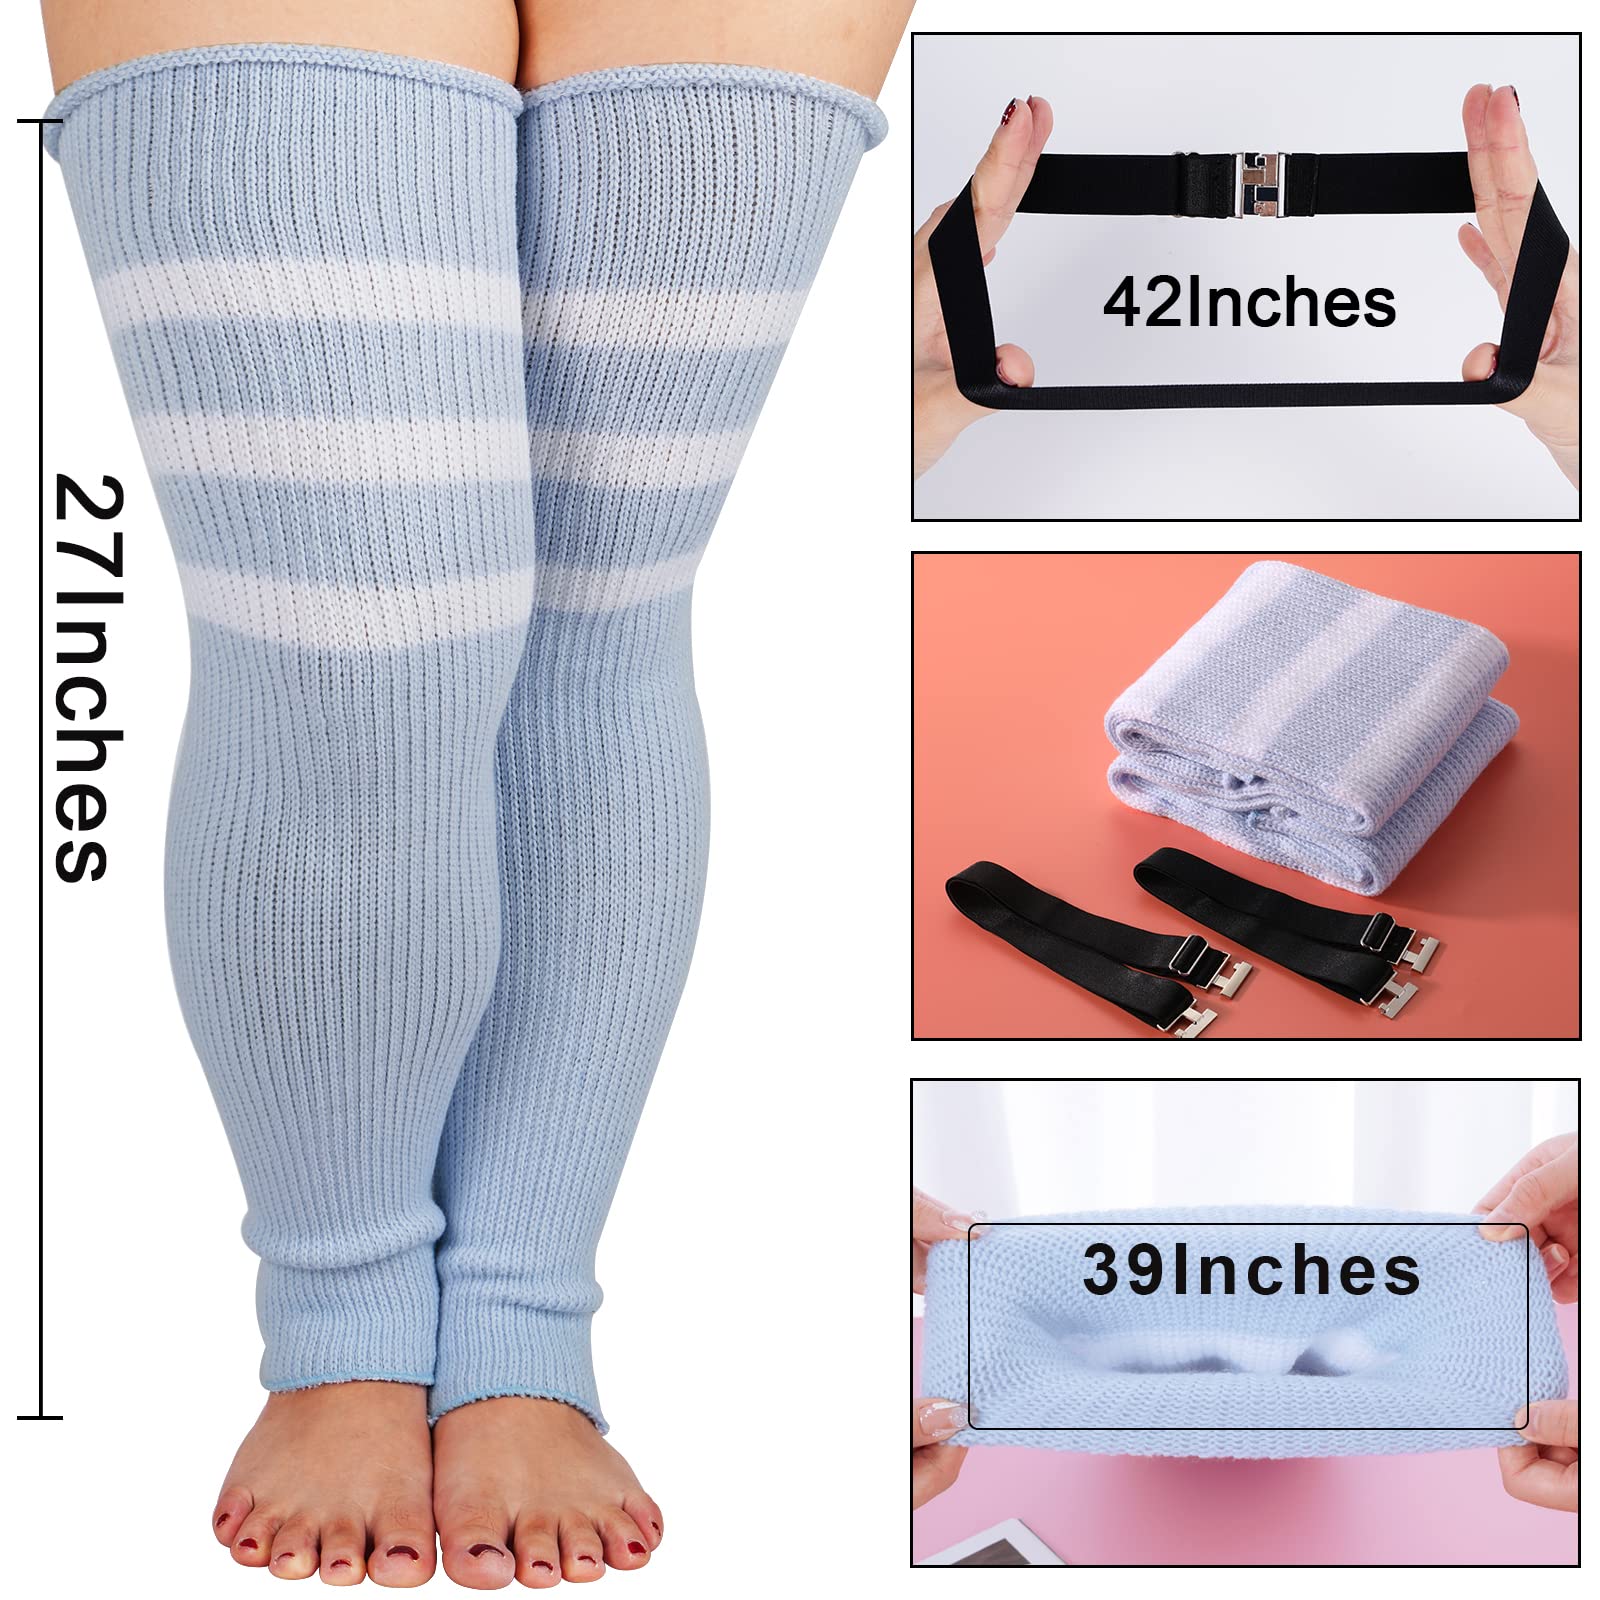 Merino Wool Stockings, Womens 100% Wool Thigh High Leg Warmers